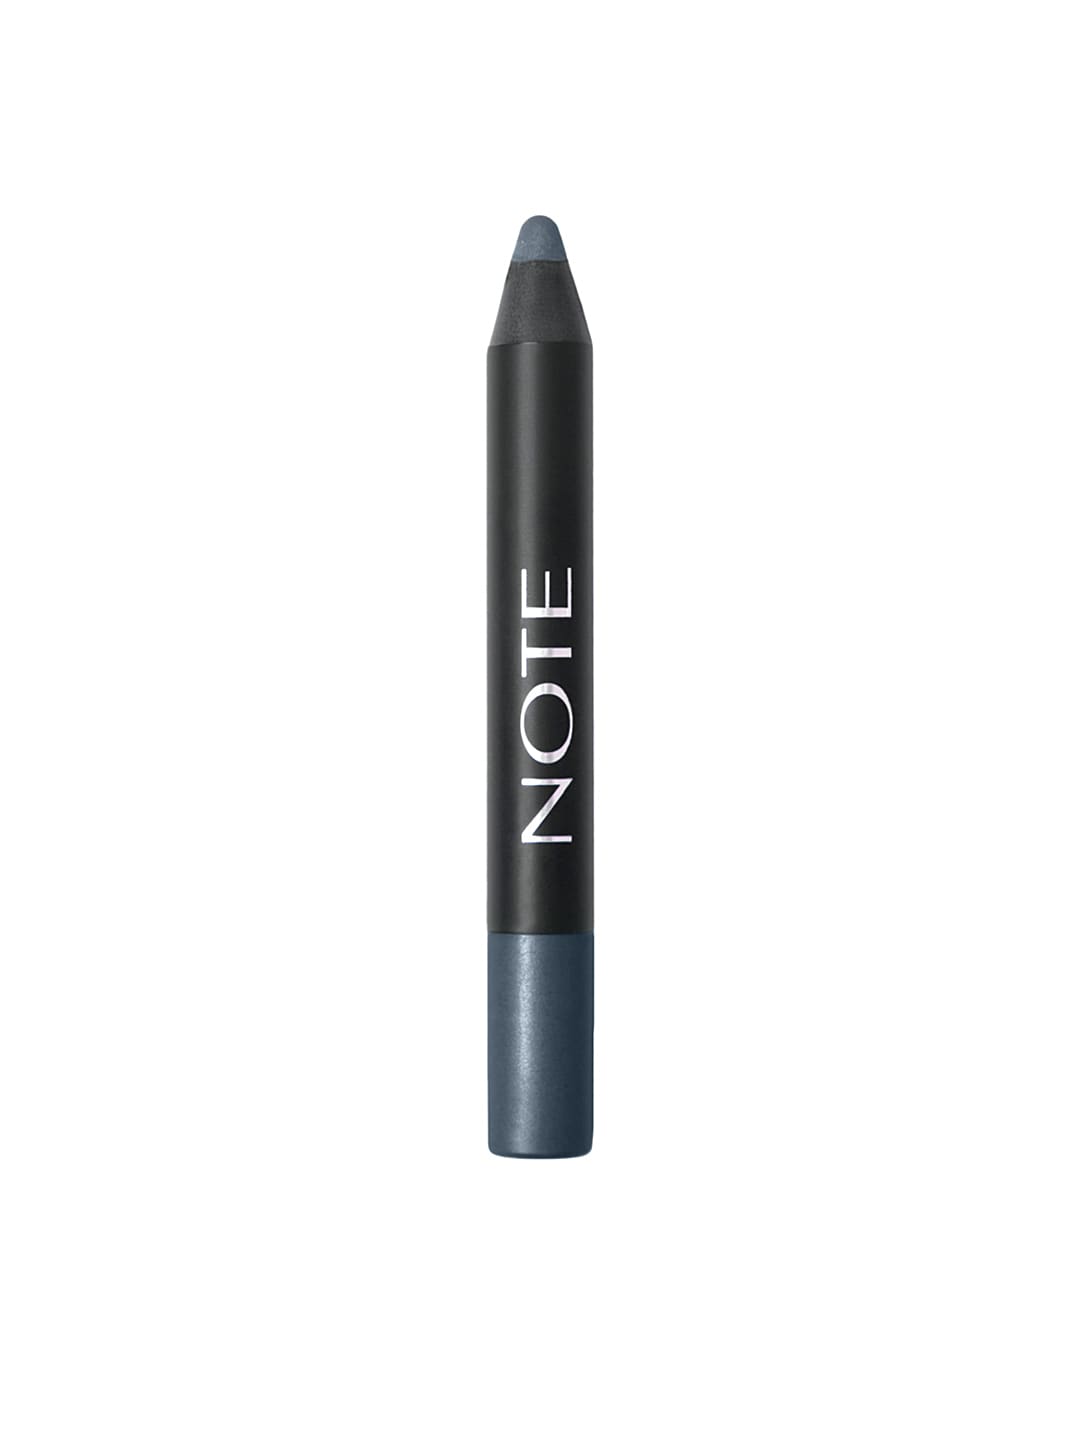 Note Blue Grey Eyeshadow Pencil 06 Price in India